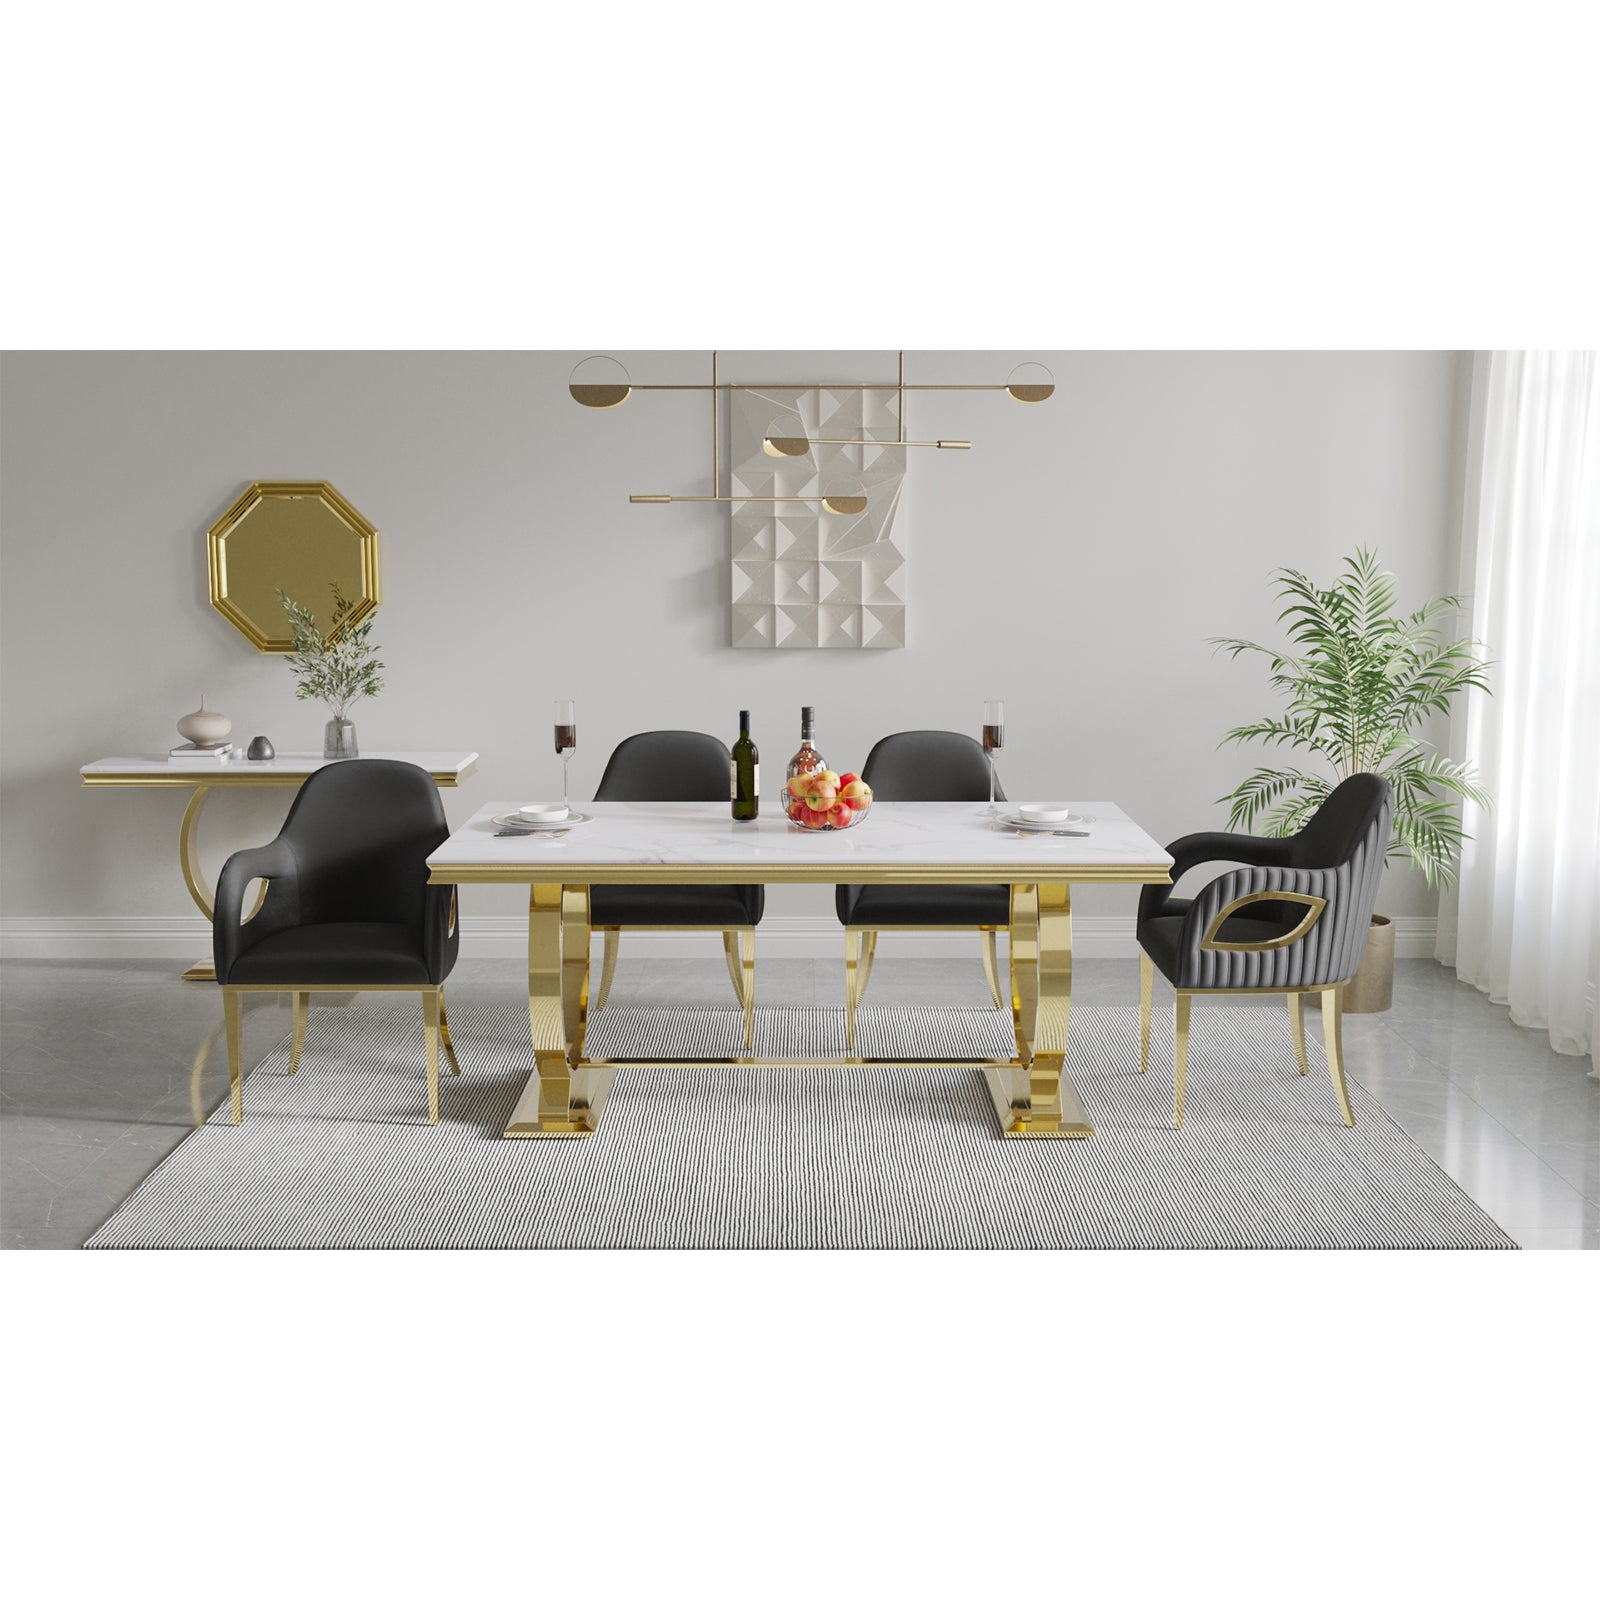 608-Set | AUZ Black and Gold Dining room Sets for 6